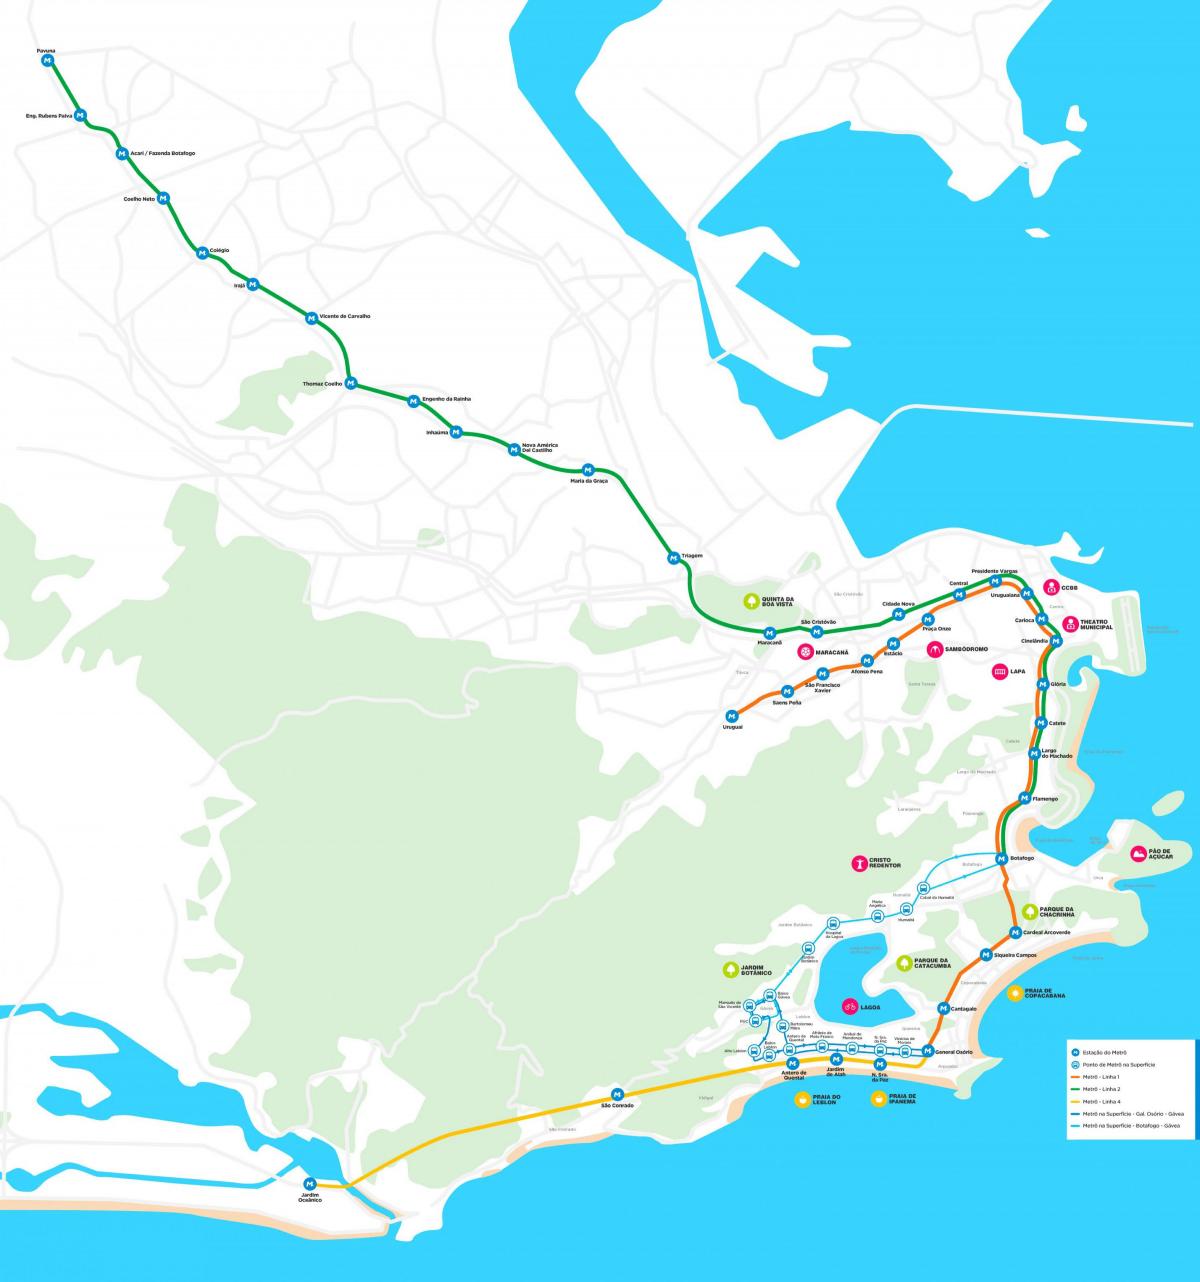 Mapa del metro de Río de Janeiro